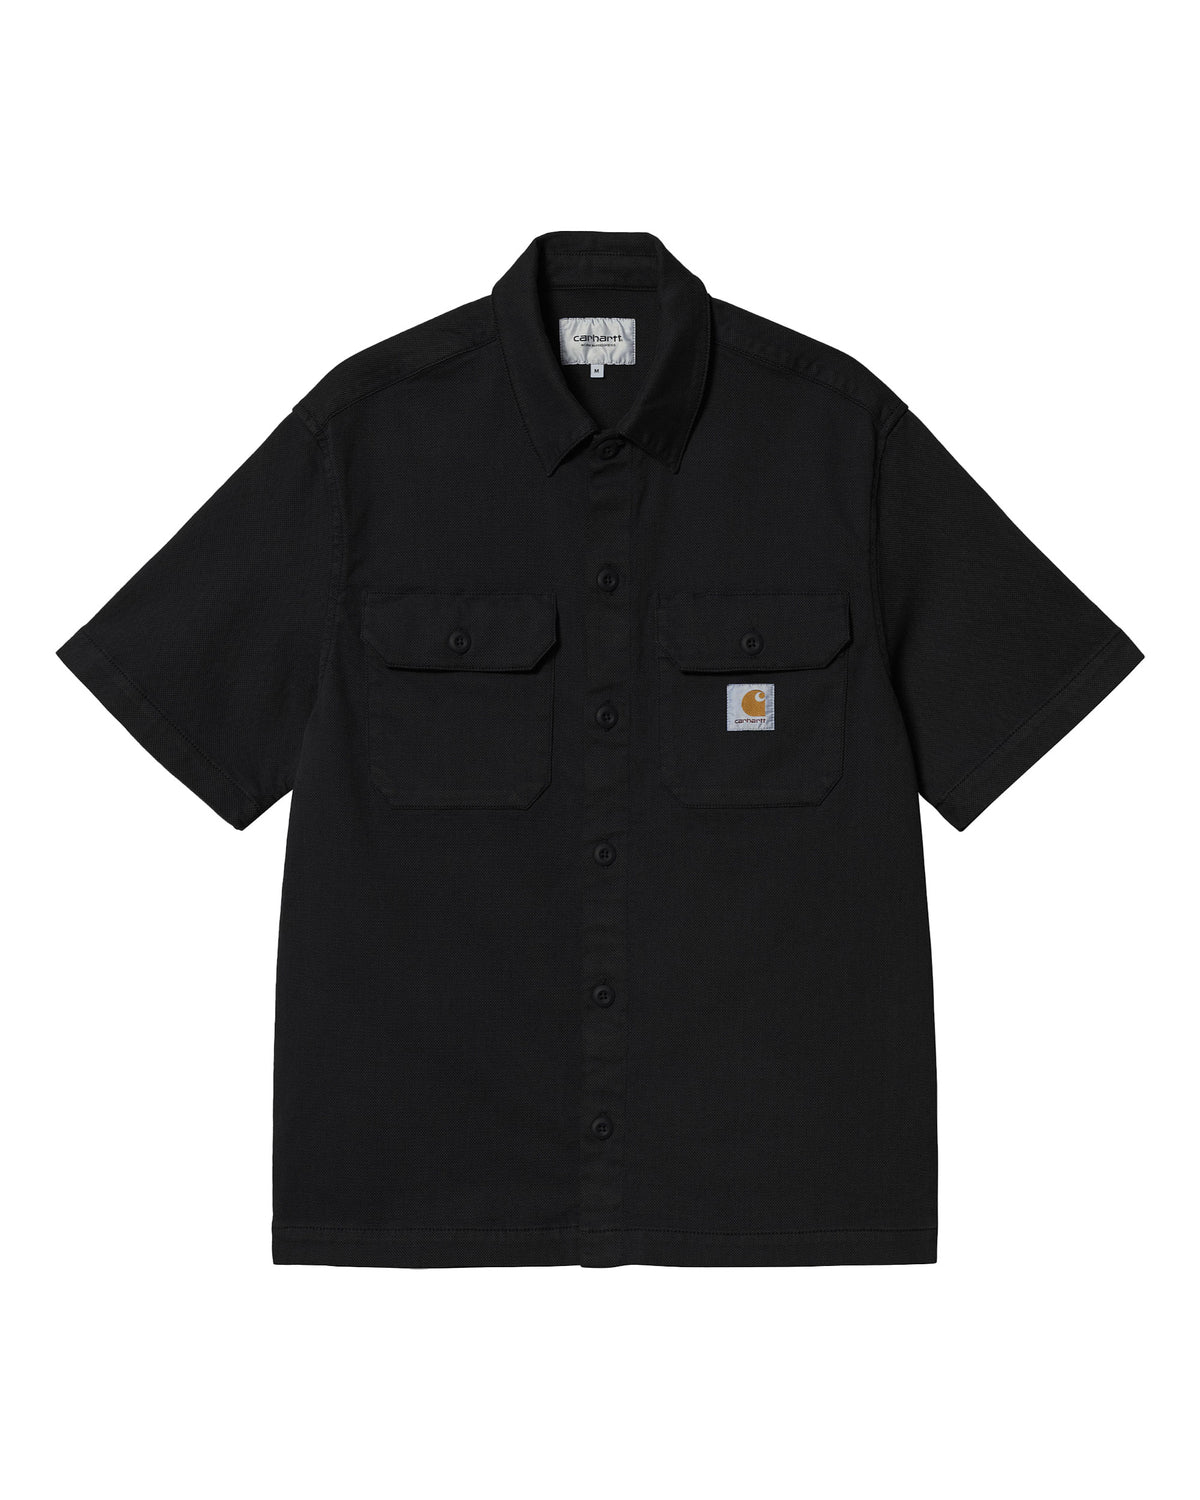 Carhartt Wip S-S Craft Shirt Black